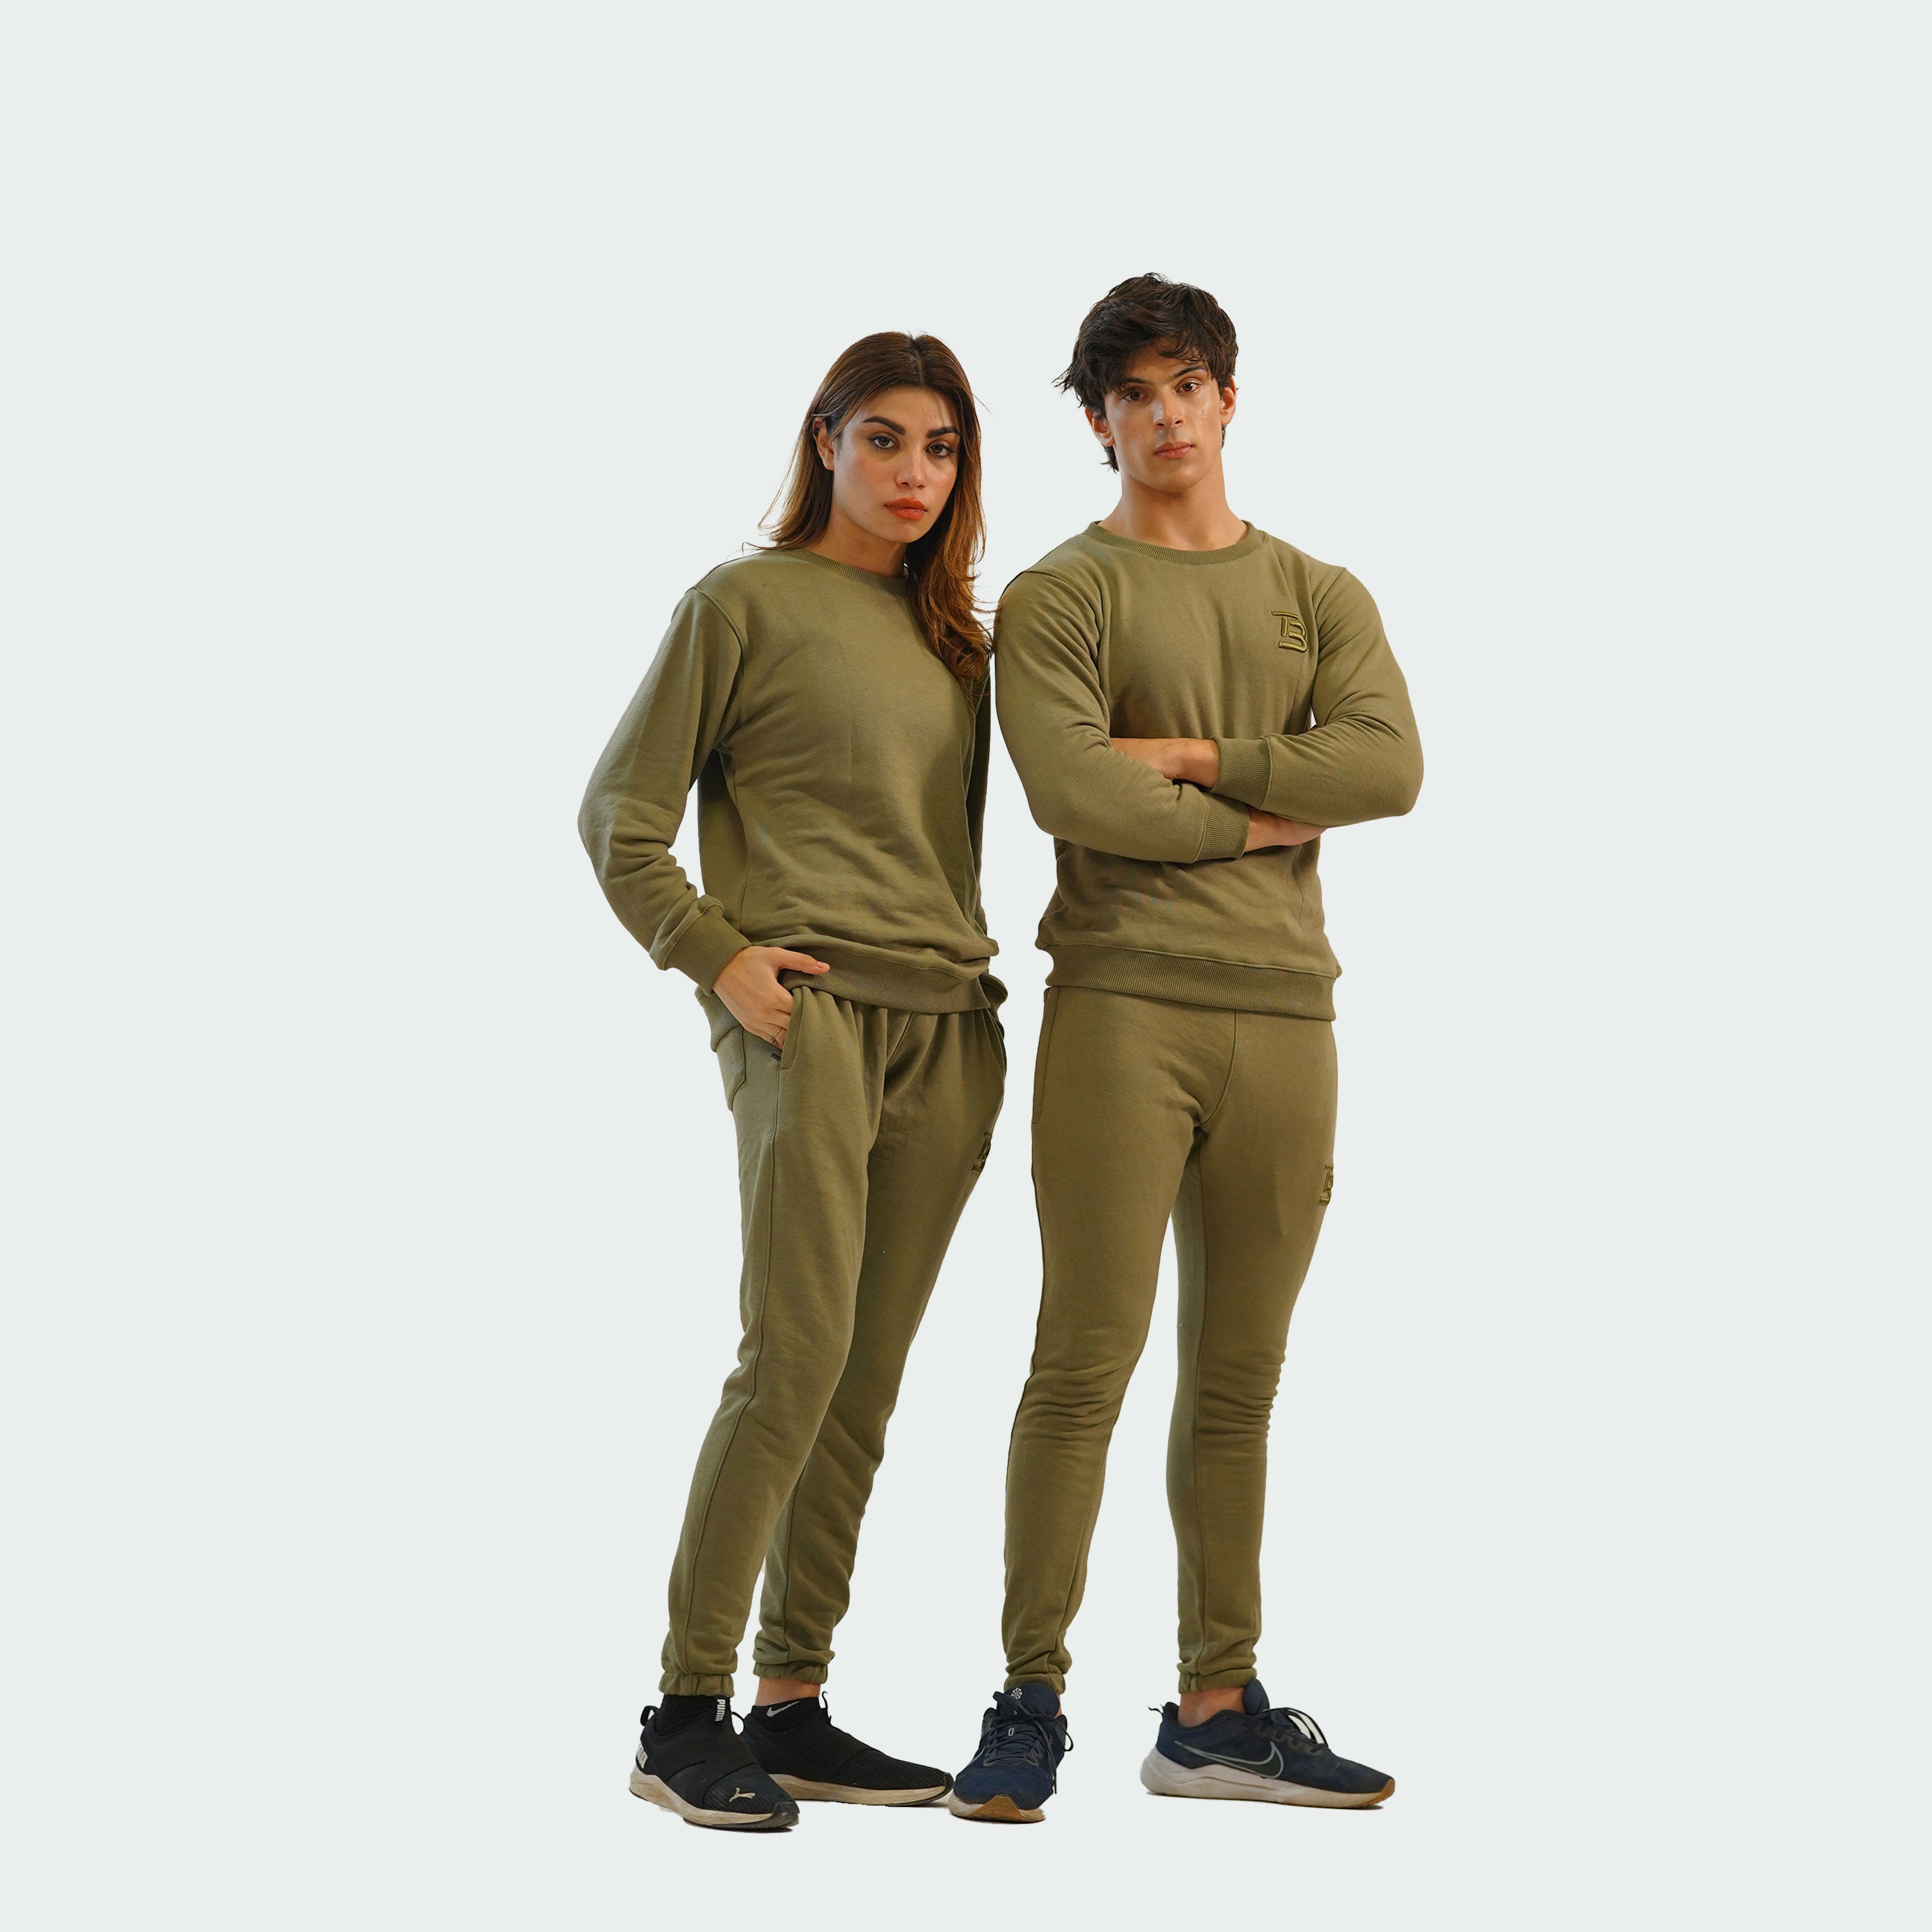 Unisex Athletic Wear- Olive Green